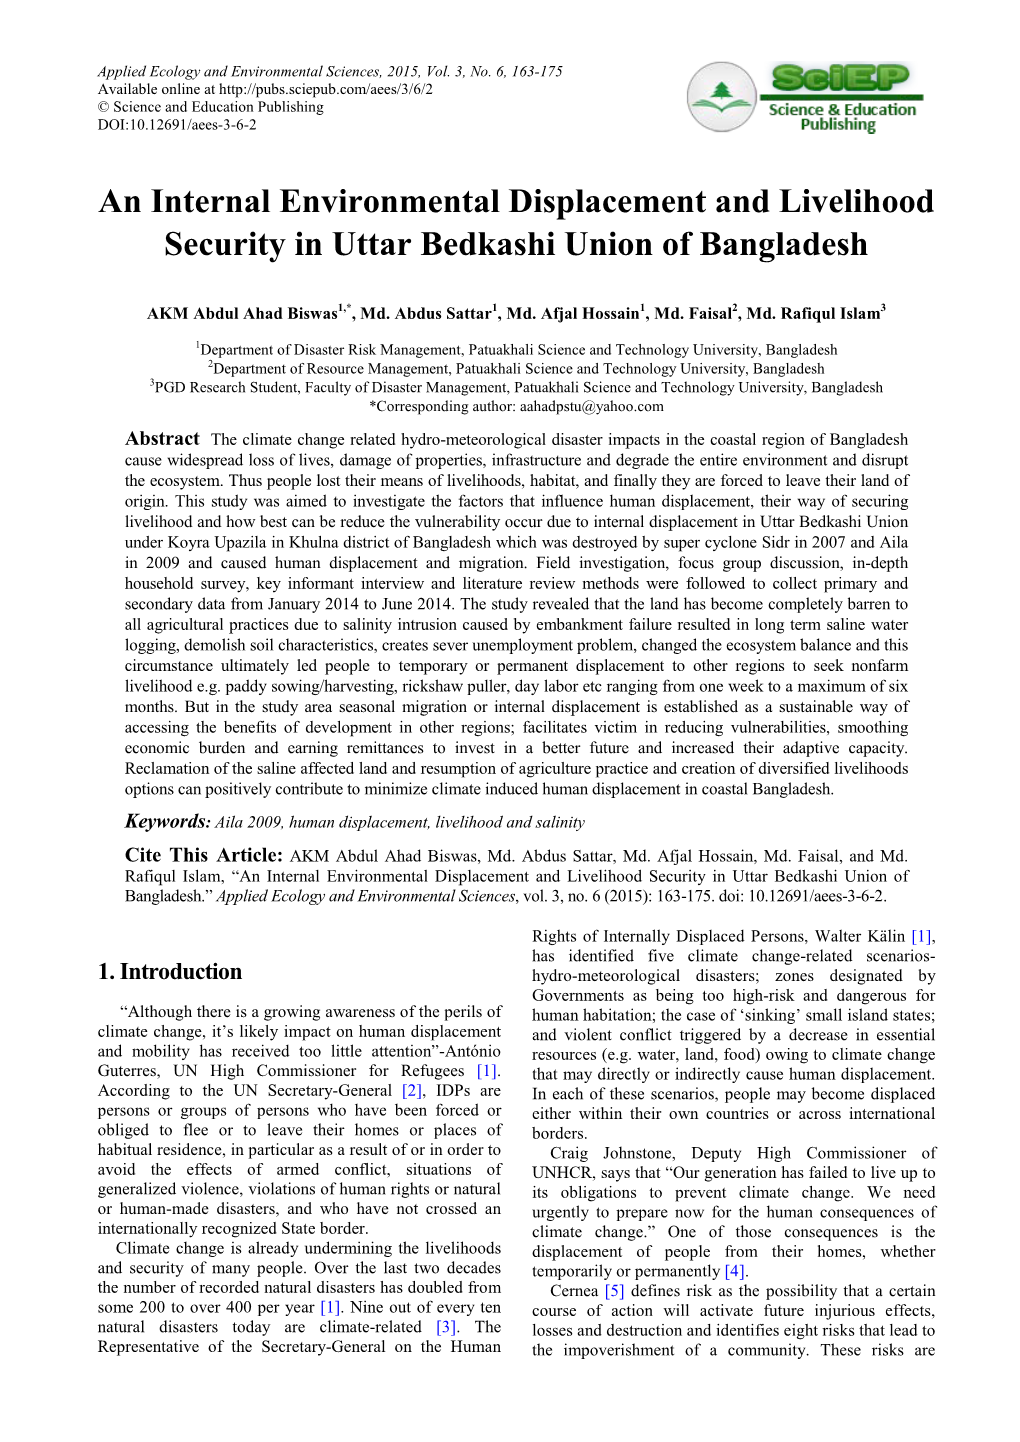 An Internal Environmental Displacement and Livelihood Security in Uttar Bedkashi Union of Bangladesh